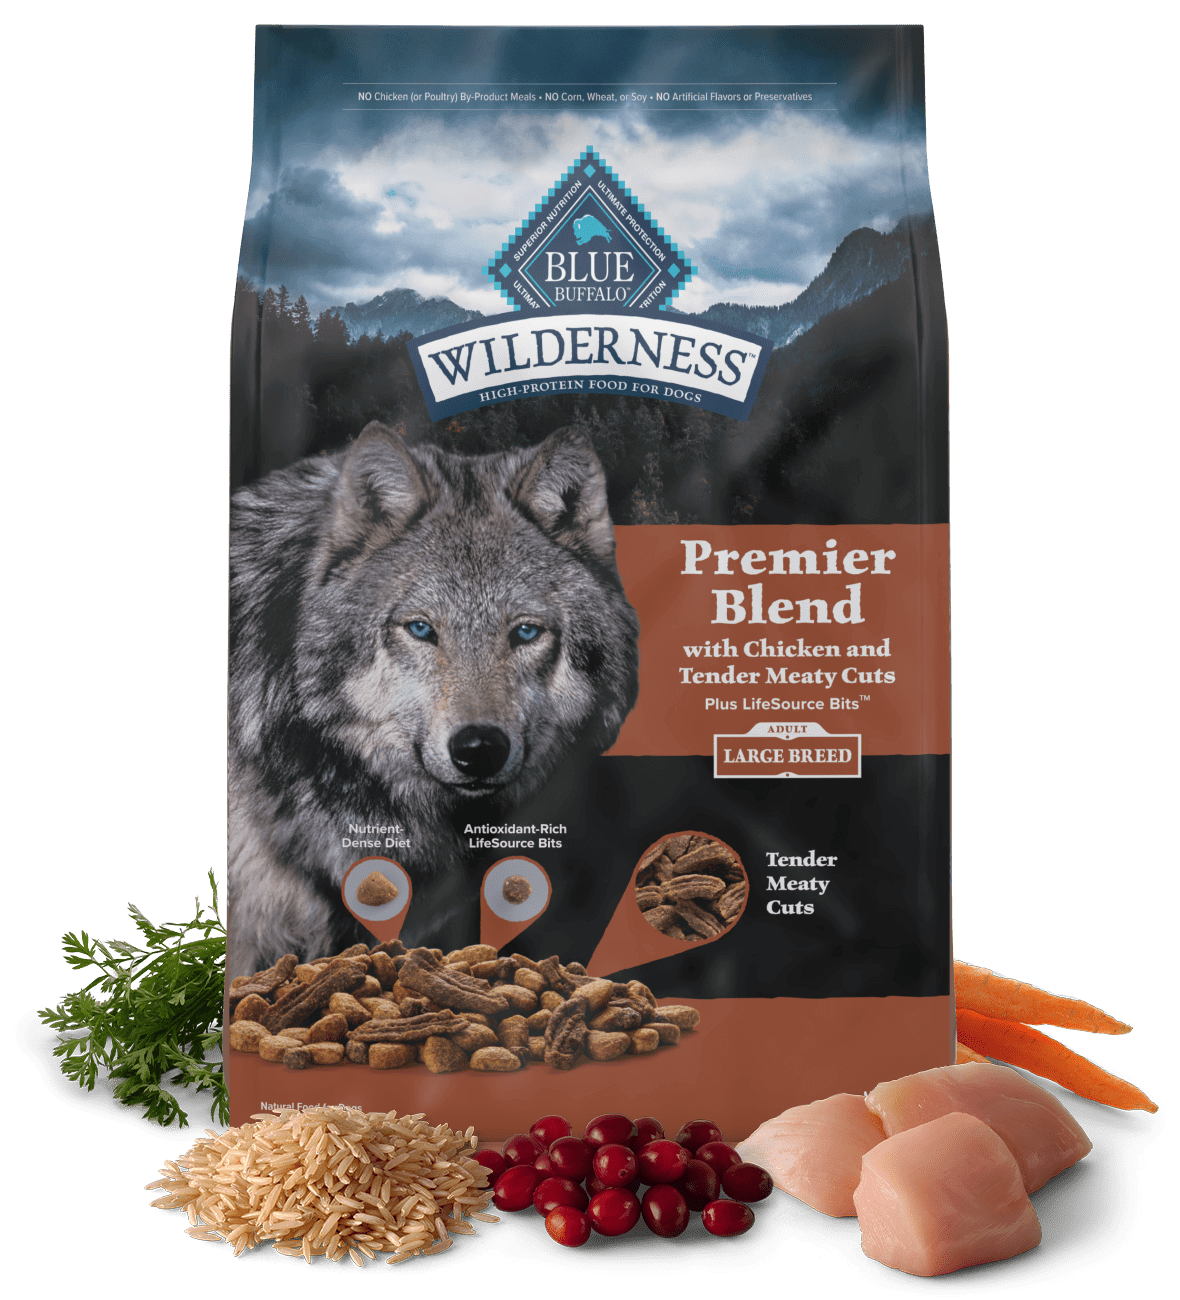 Wilderness dog food